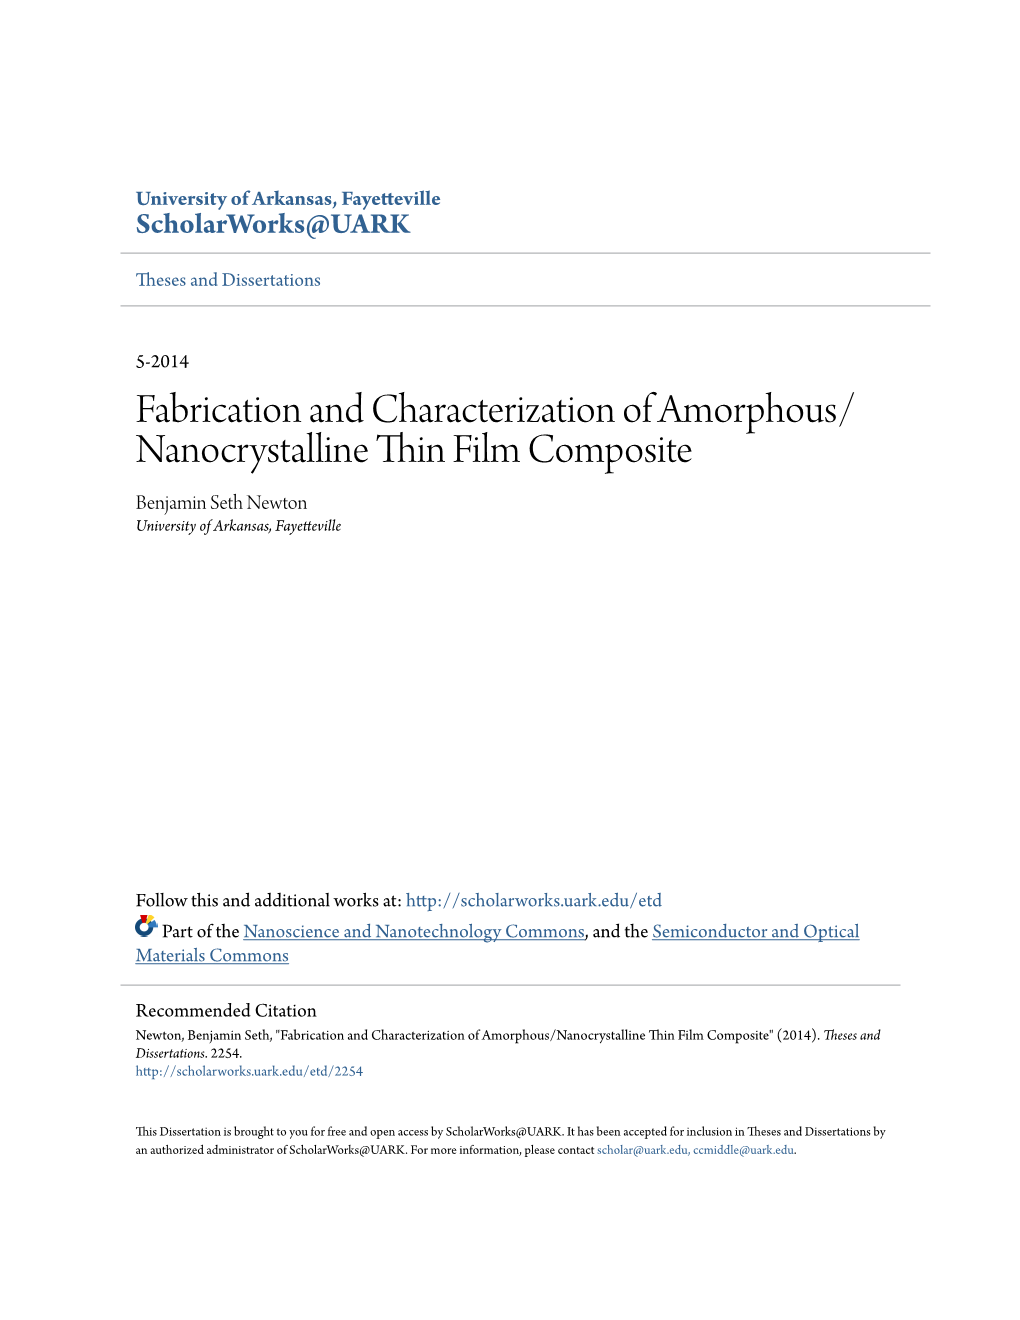 Fabrication and Characterization of Amorphous/Nanocrystalline Thin Film Composite